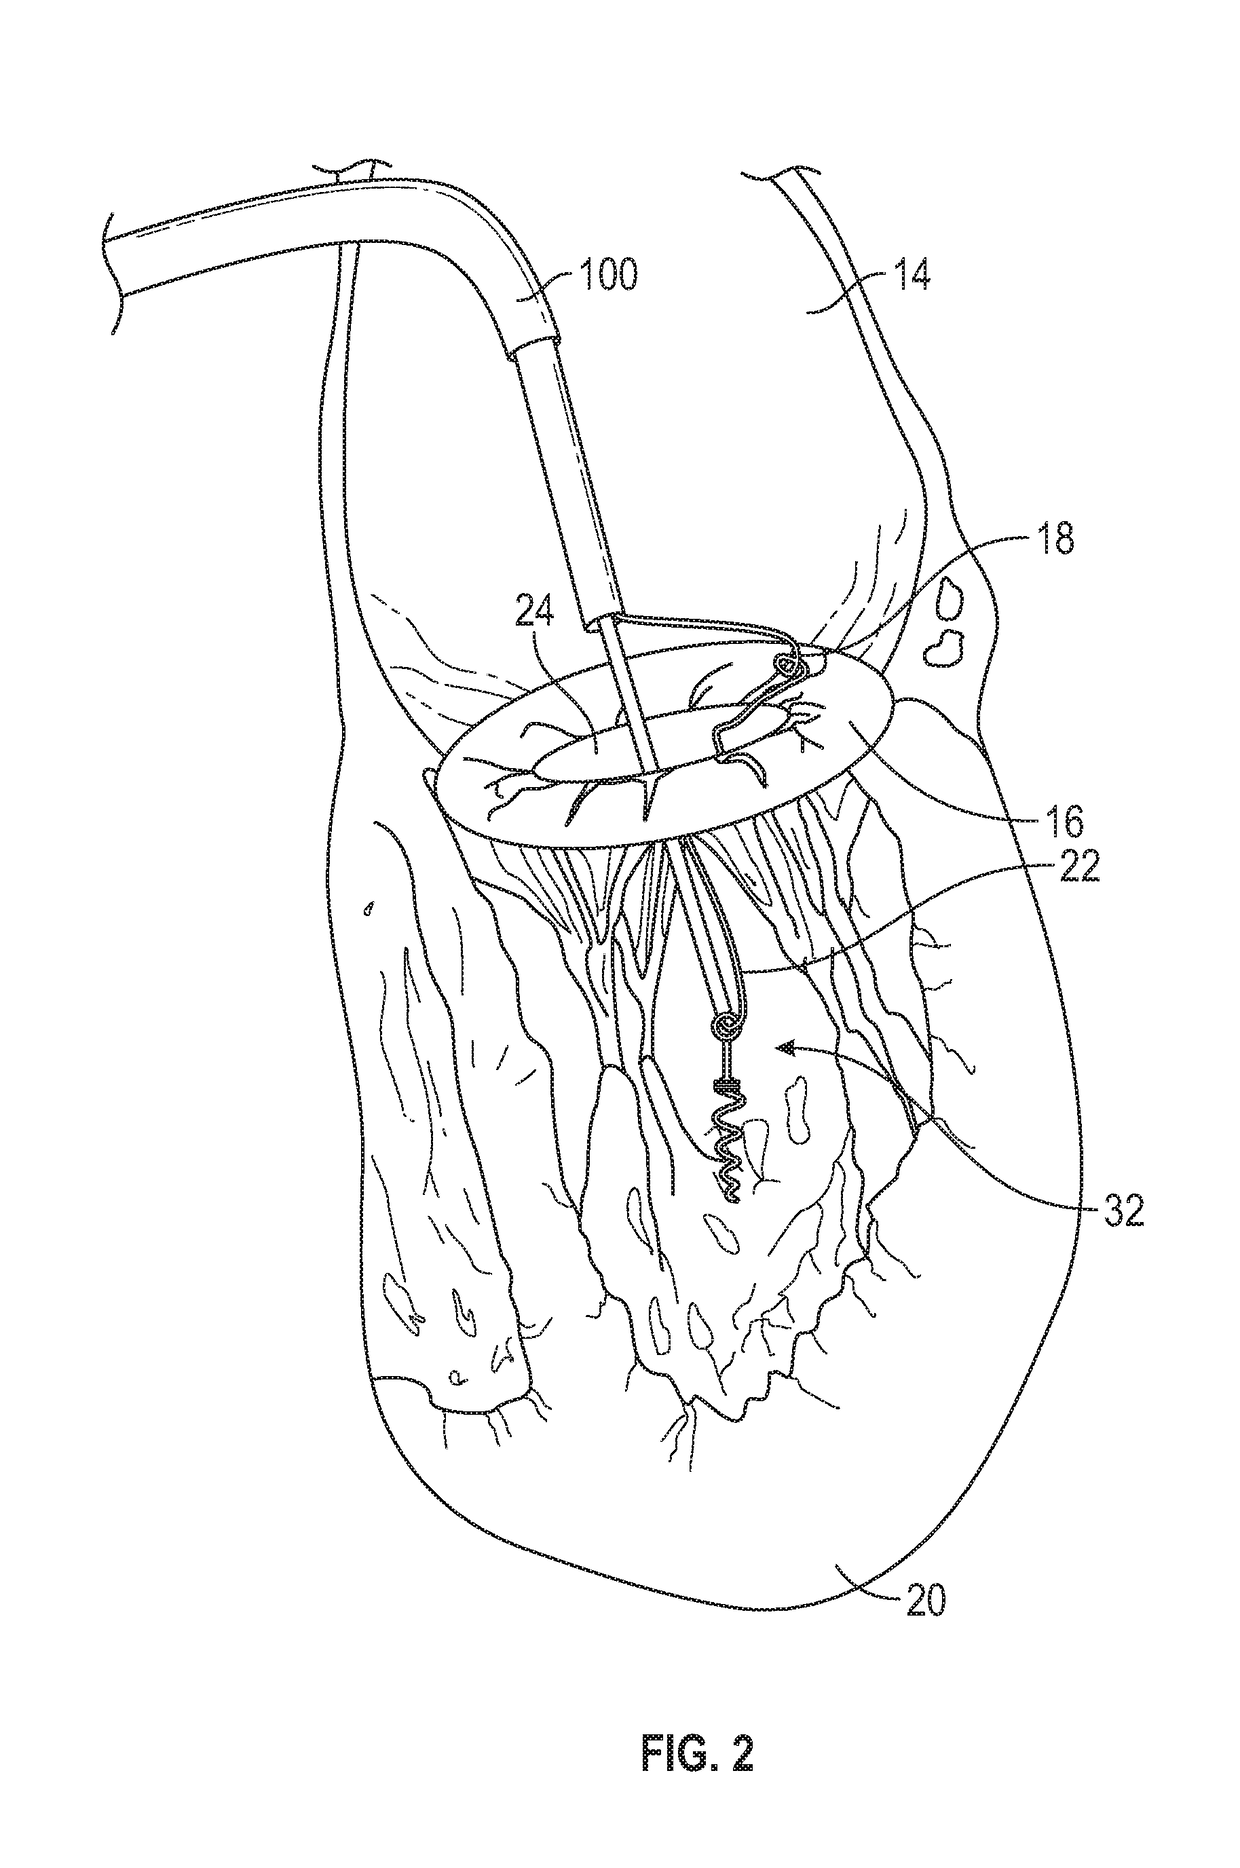 Method and apparatus for transvascular implantation of neo chordae tendinae